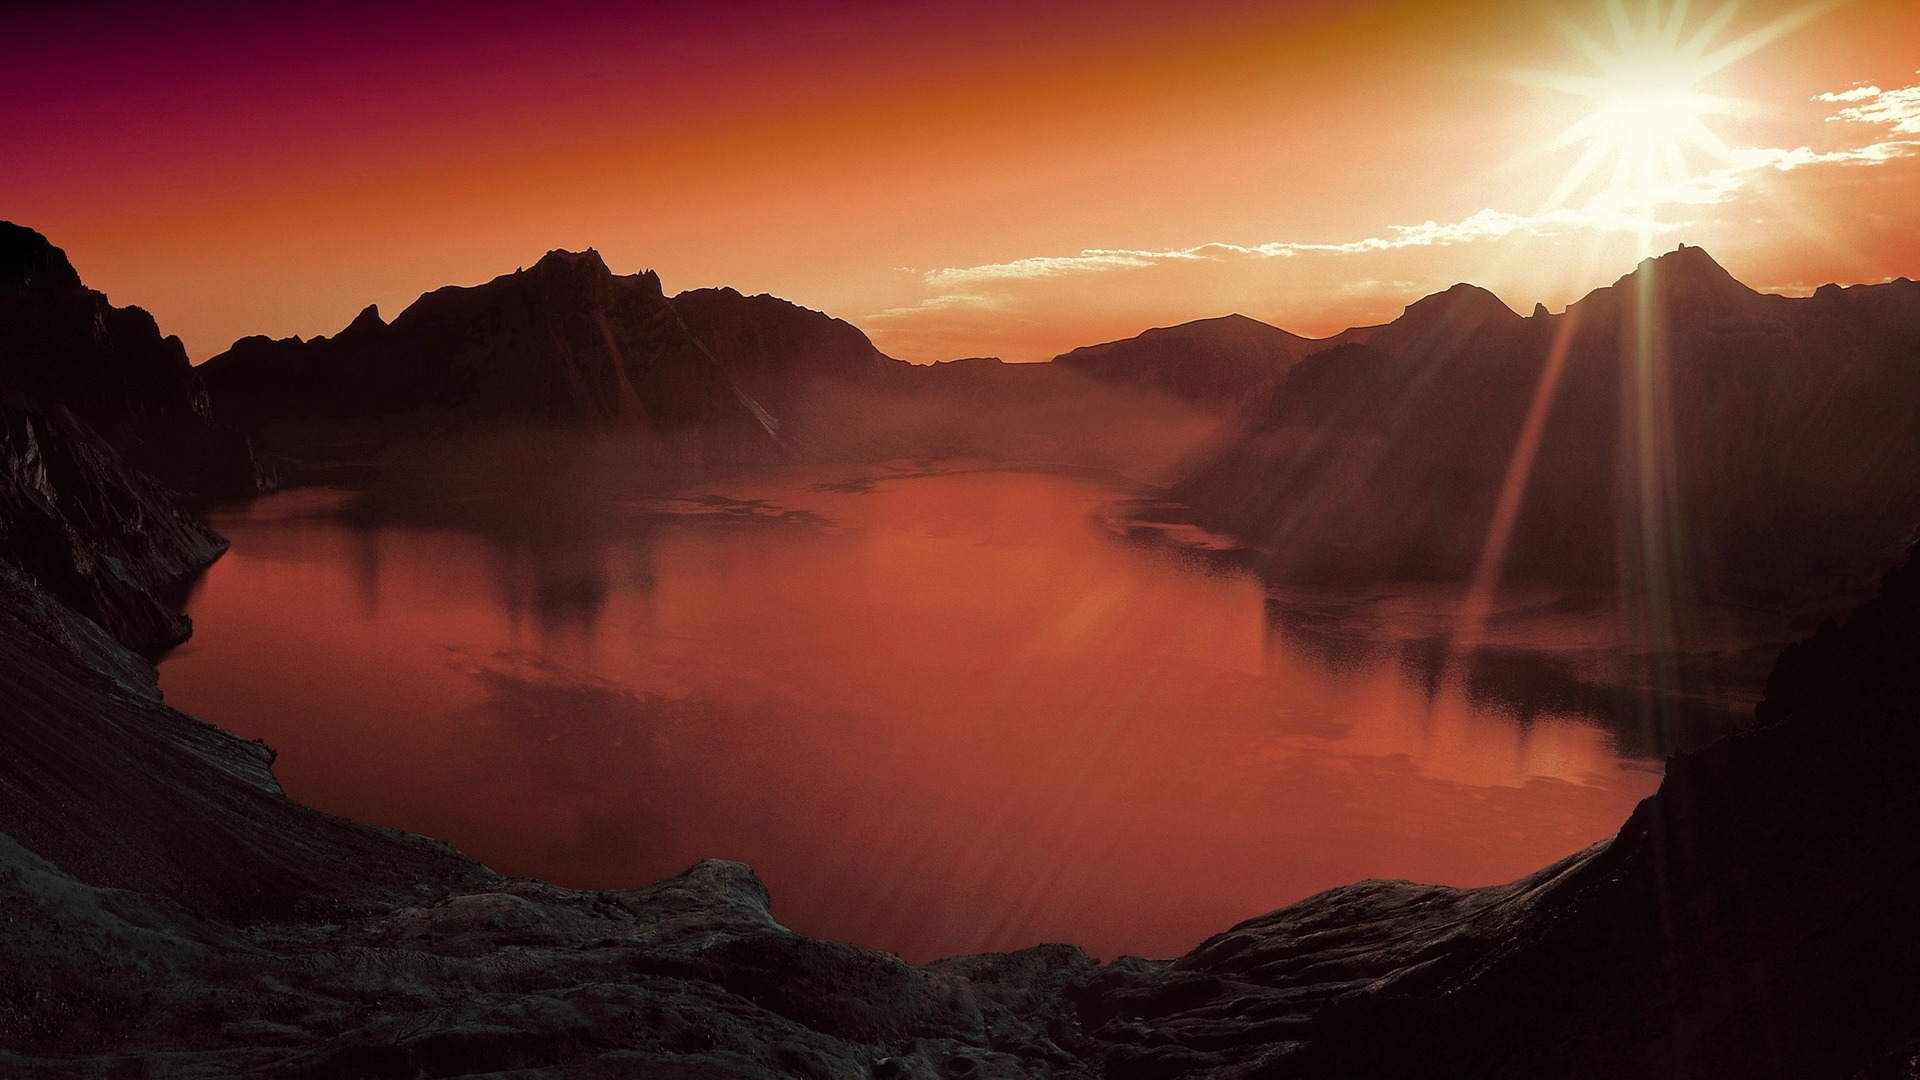 Sunset Lake Mountain Scenery Landscape Nature 4k Zb - Psalm 121 1 2 , HD Wallpaper & Backgrounds